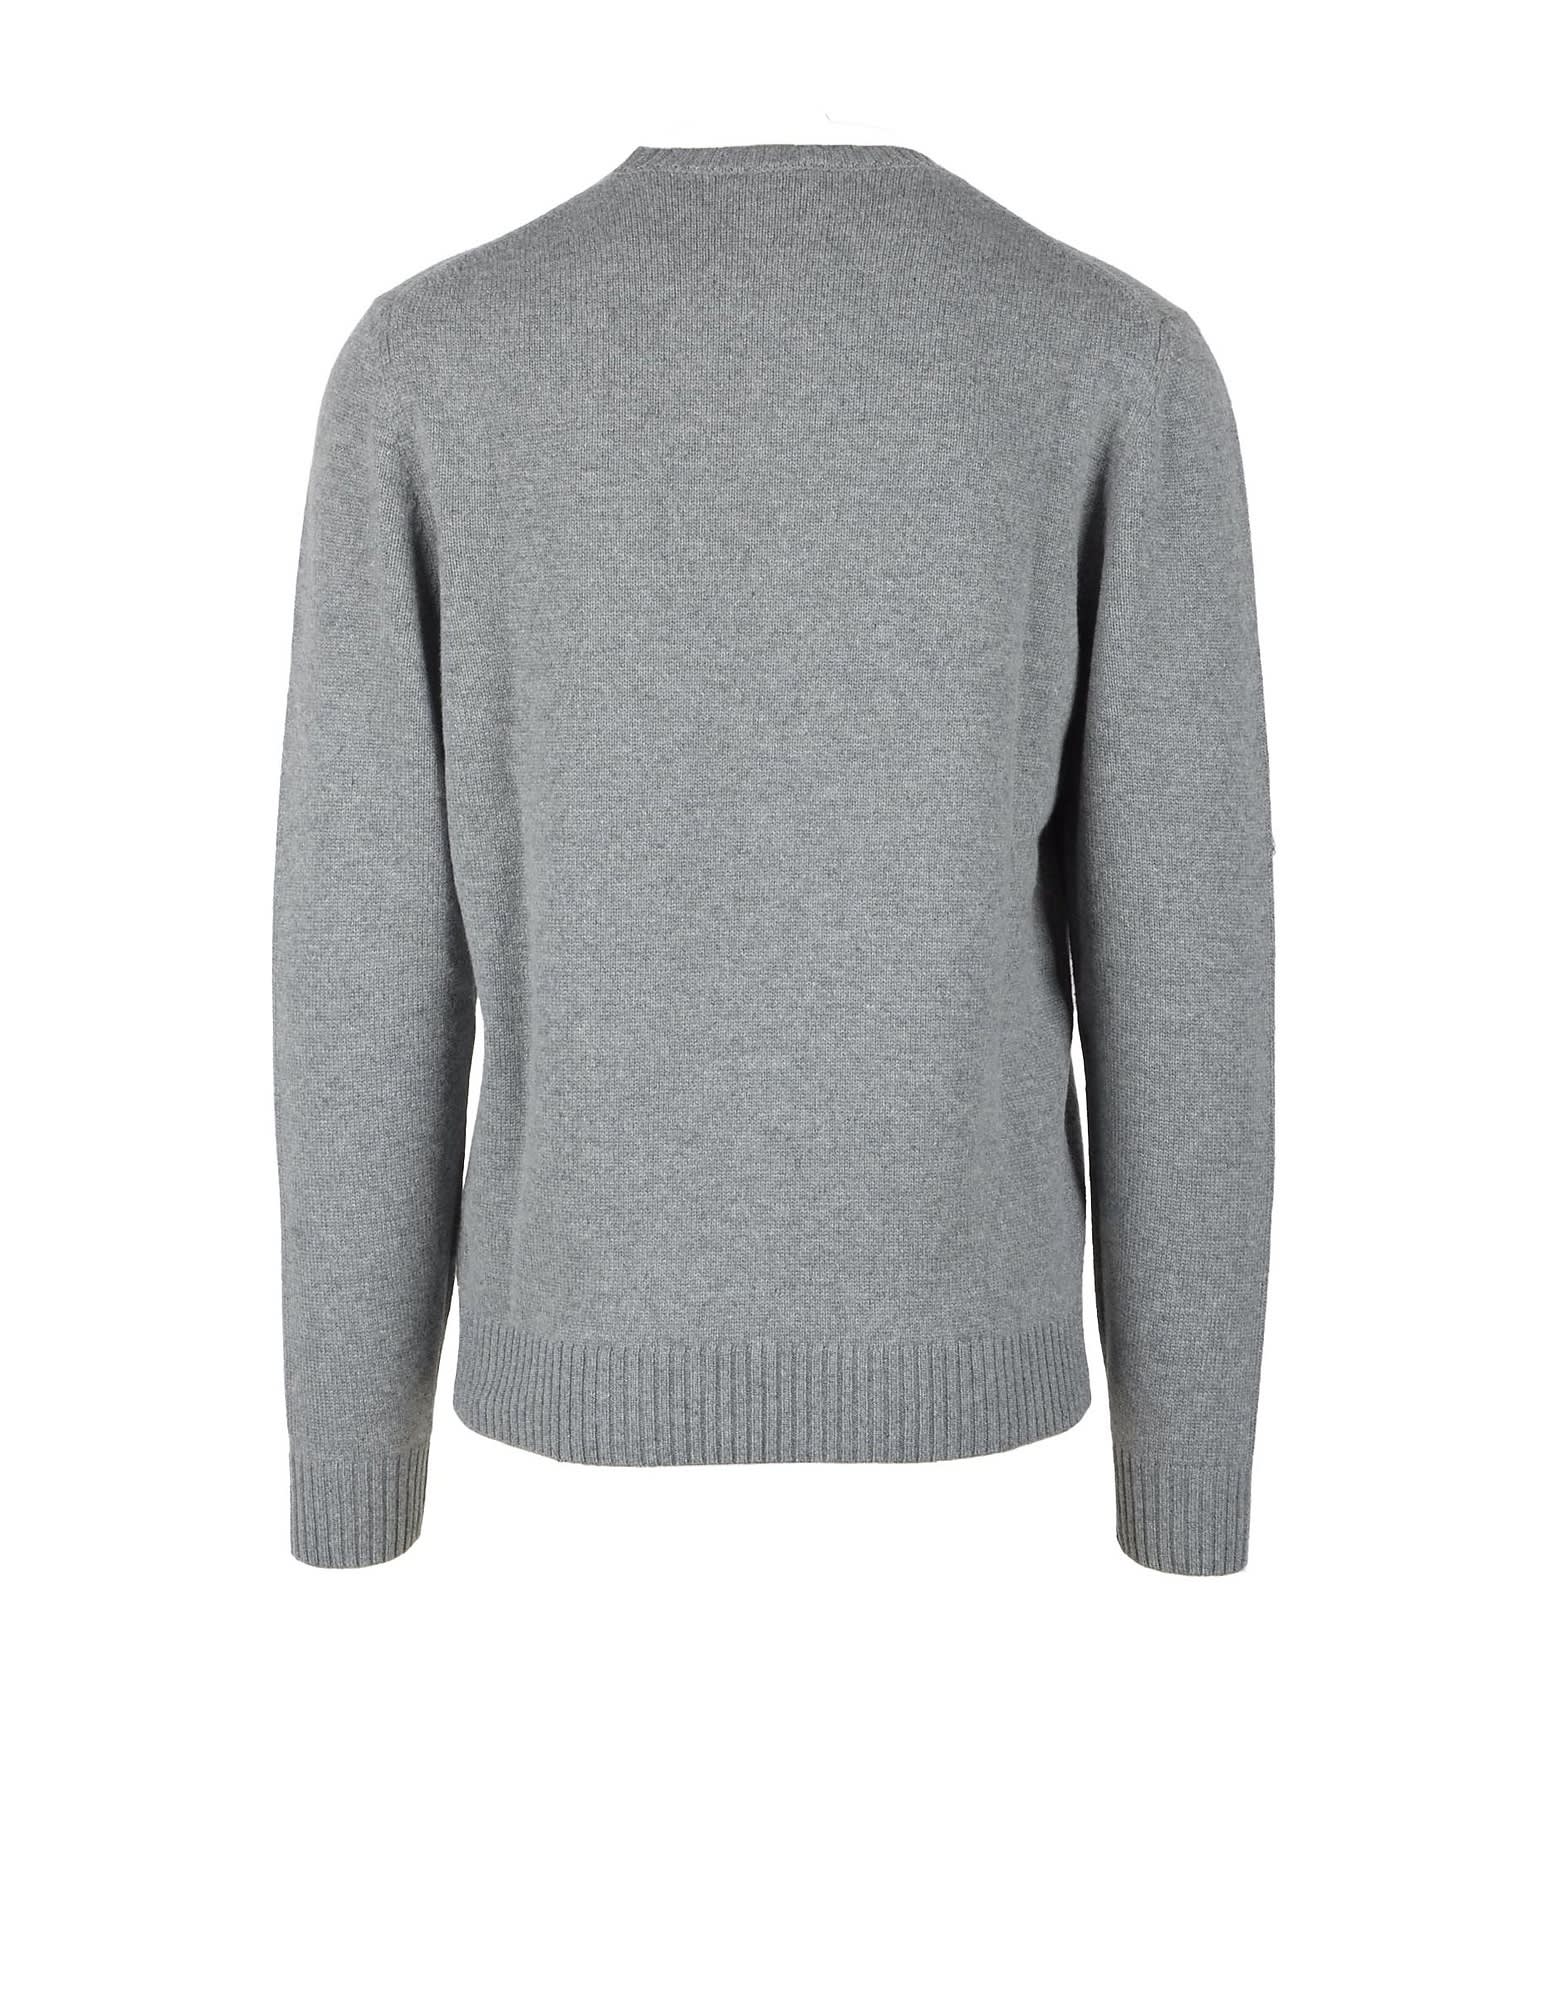 Shop Luigi Borrelli Mens Gray Sweater